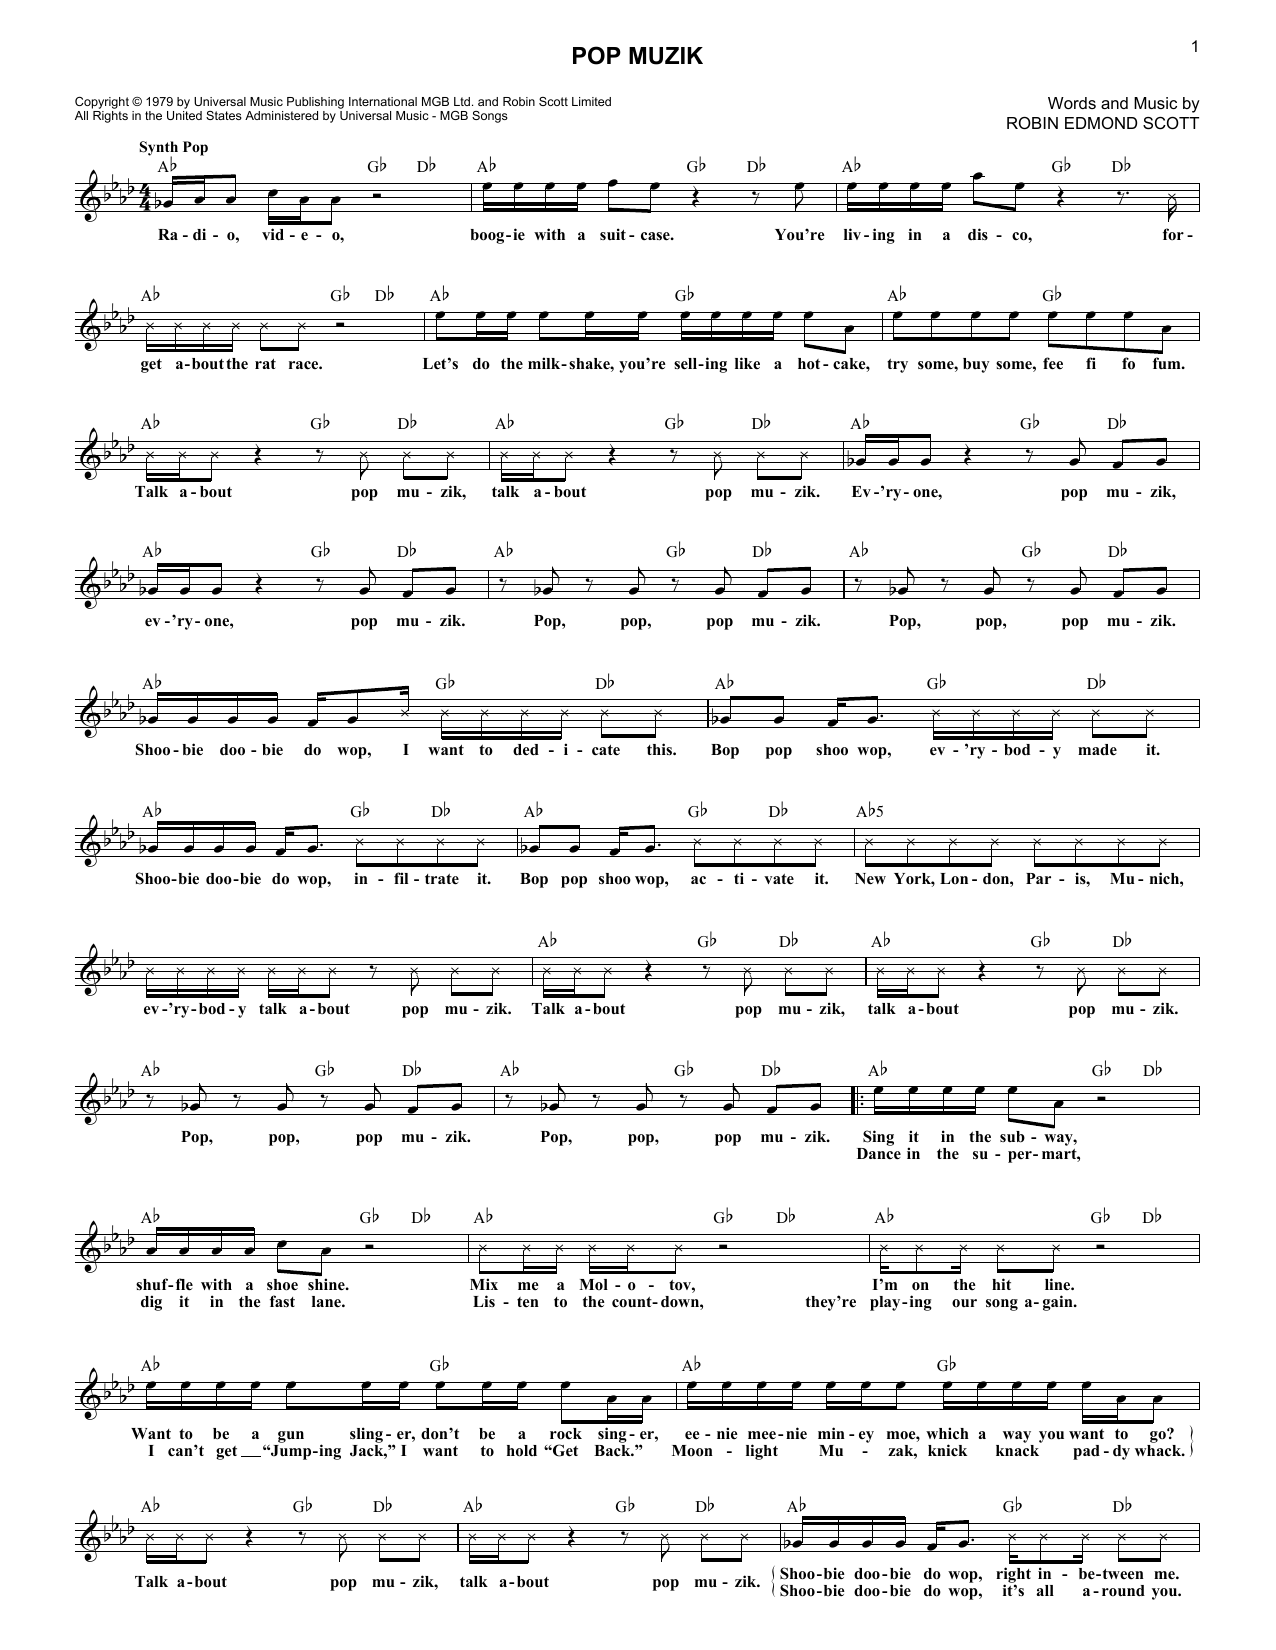 Download Robin Edmond Scott Pop Muzik Sheet Music and learn how to play Melody Line, Lyrics & Chords PDF digital score in minutes